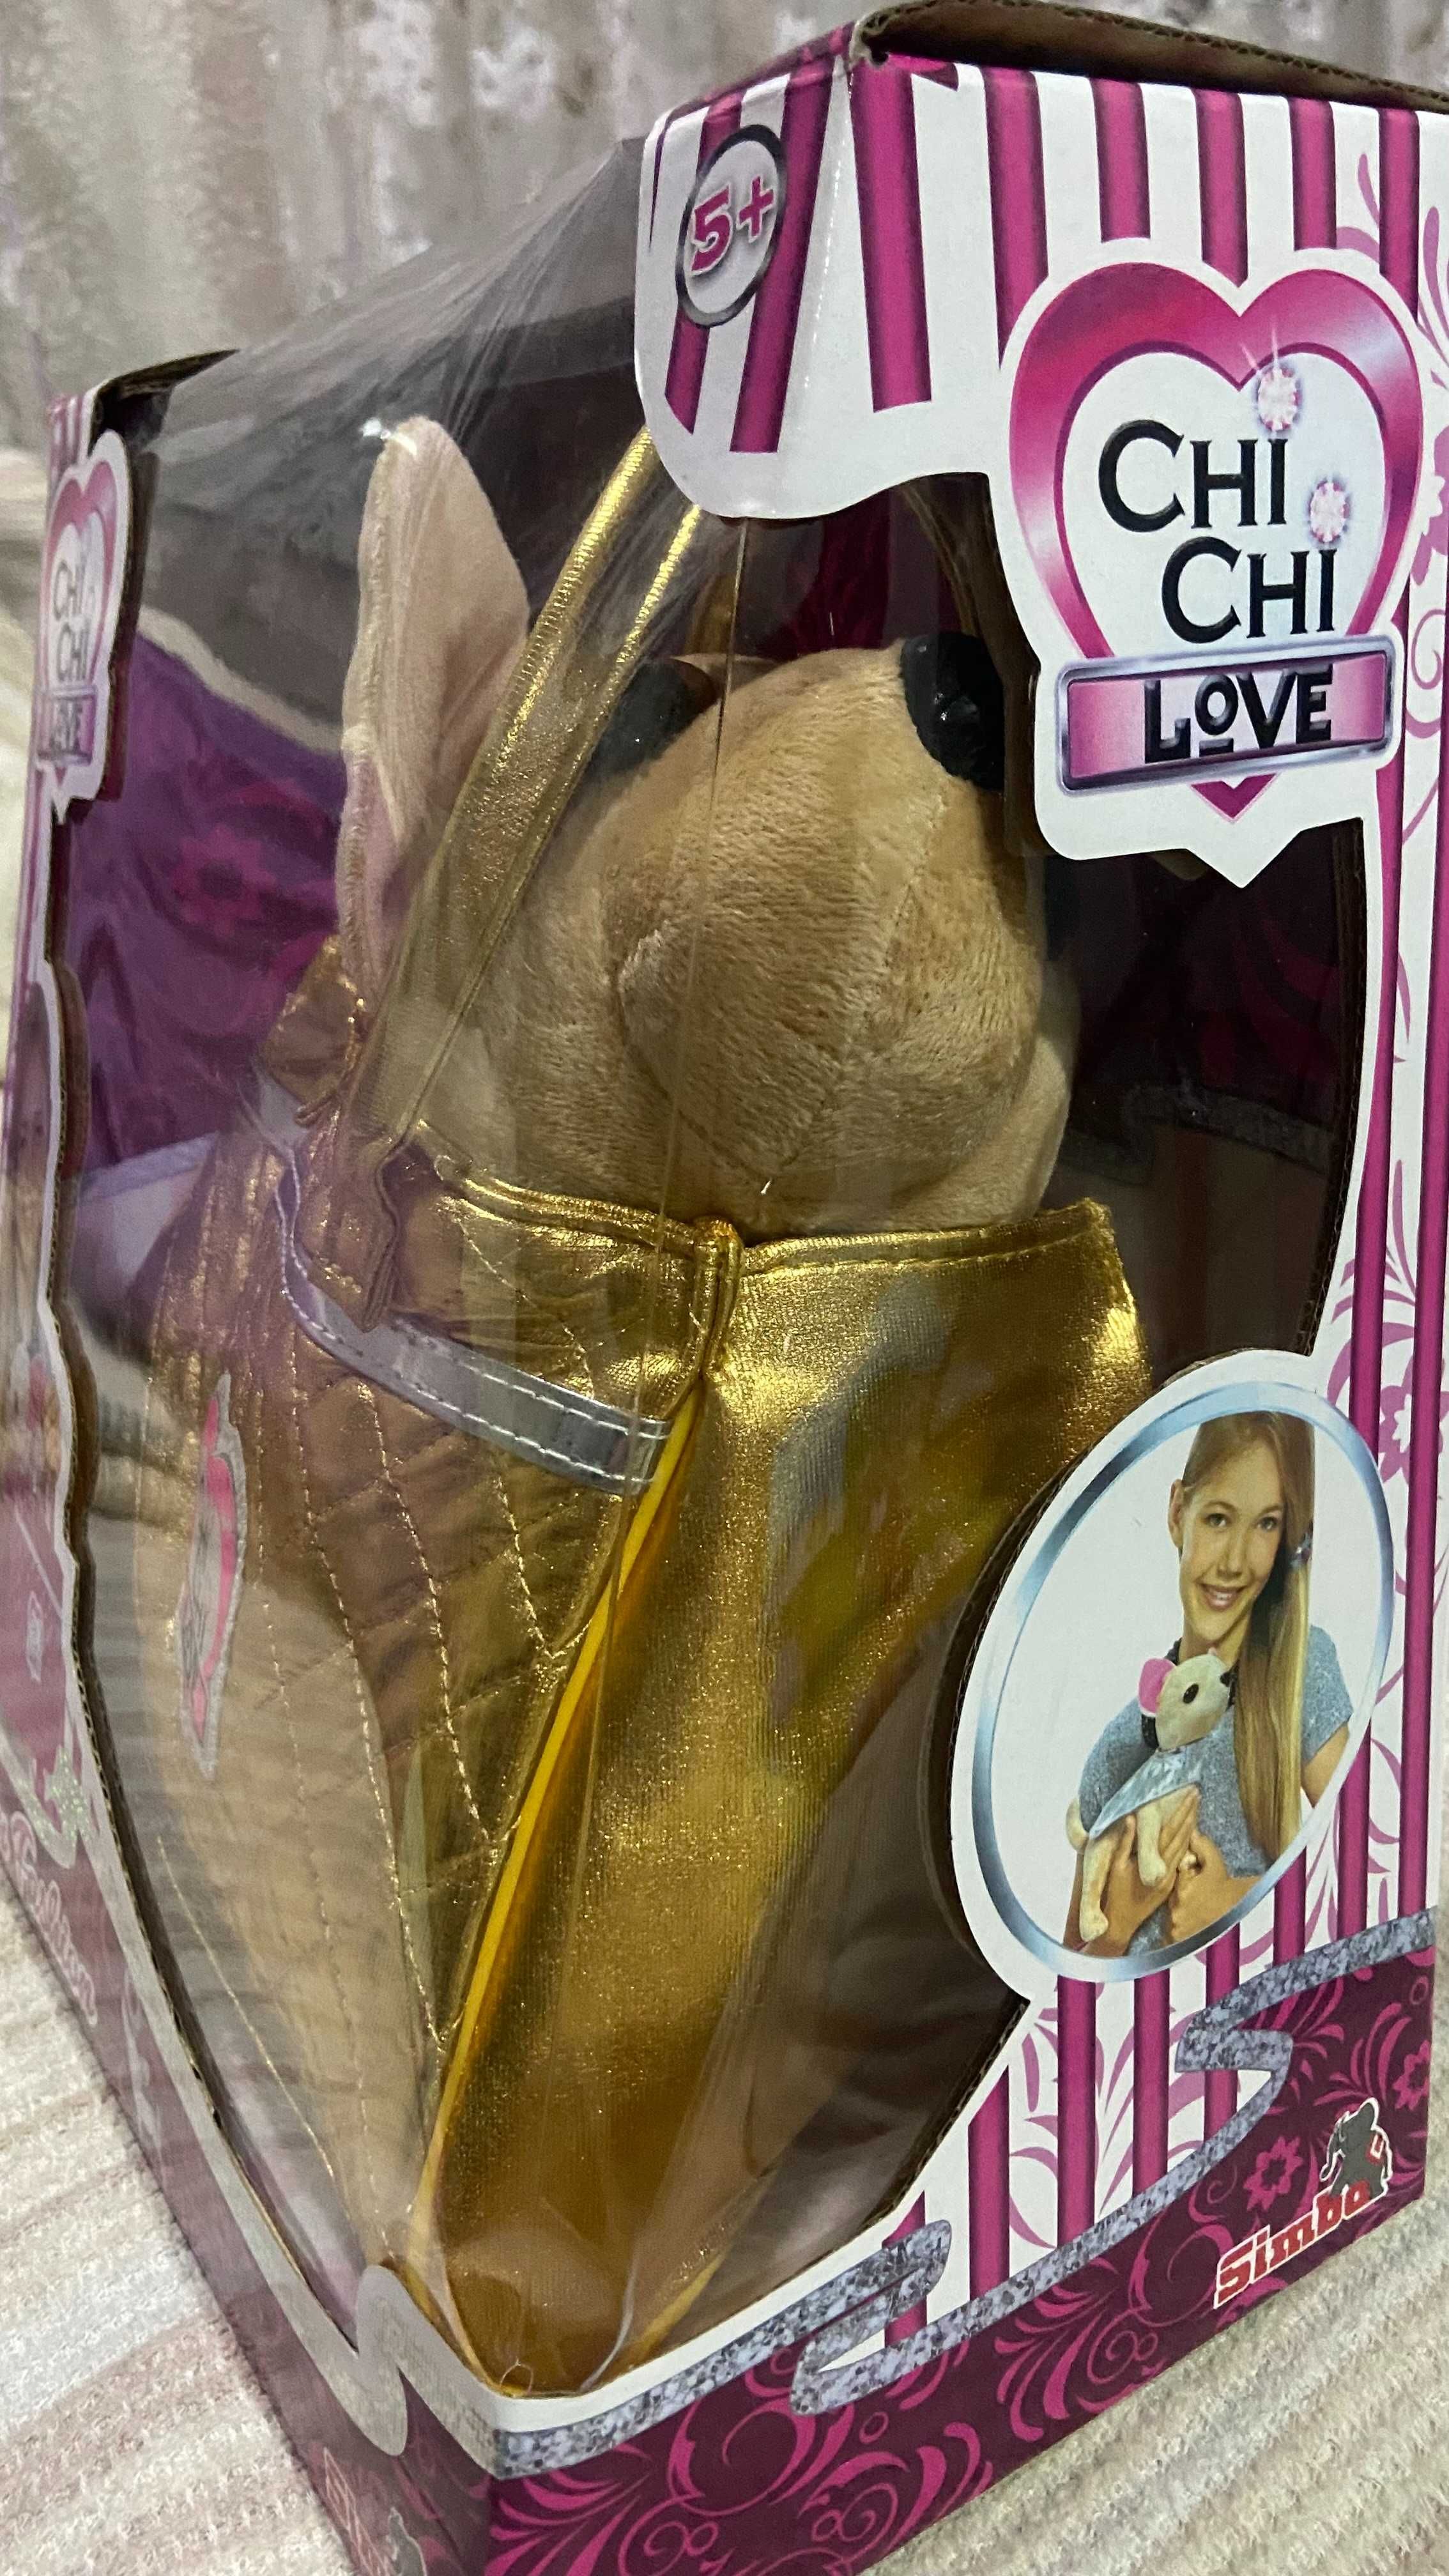 собачка в сумке собака песик интерактивная чихуахуа chi chi love